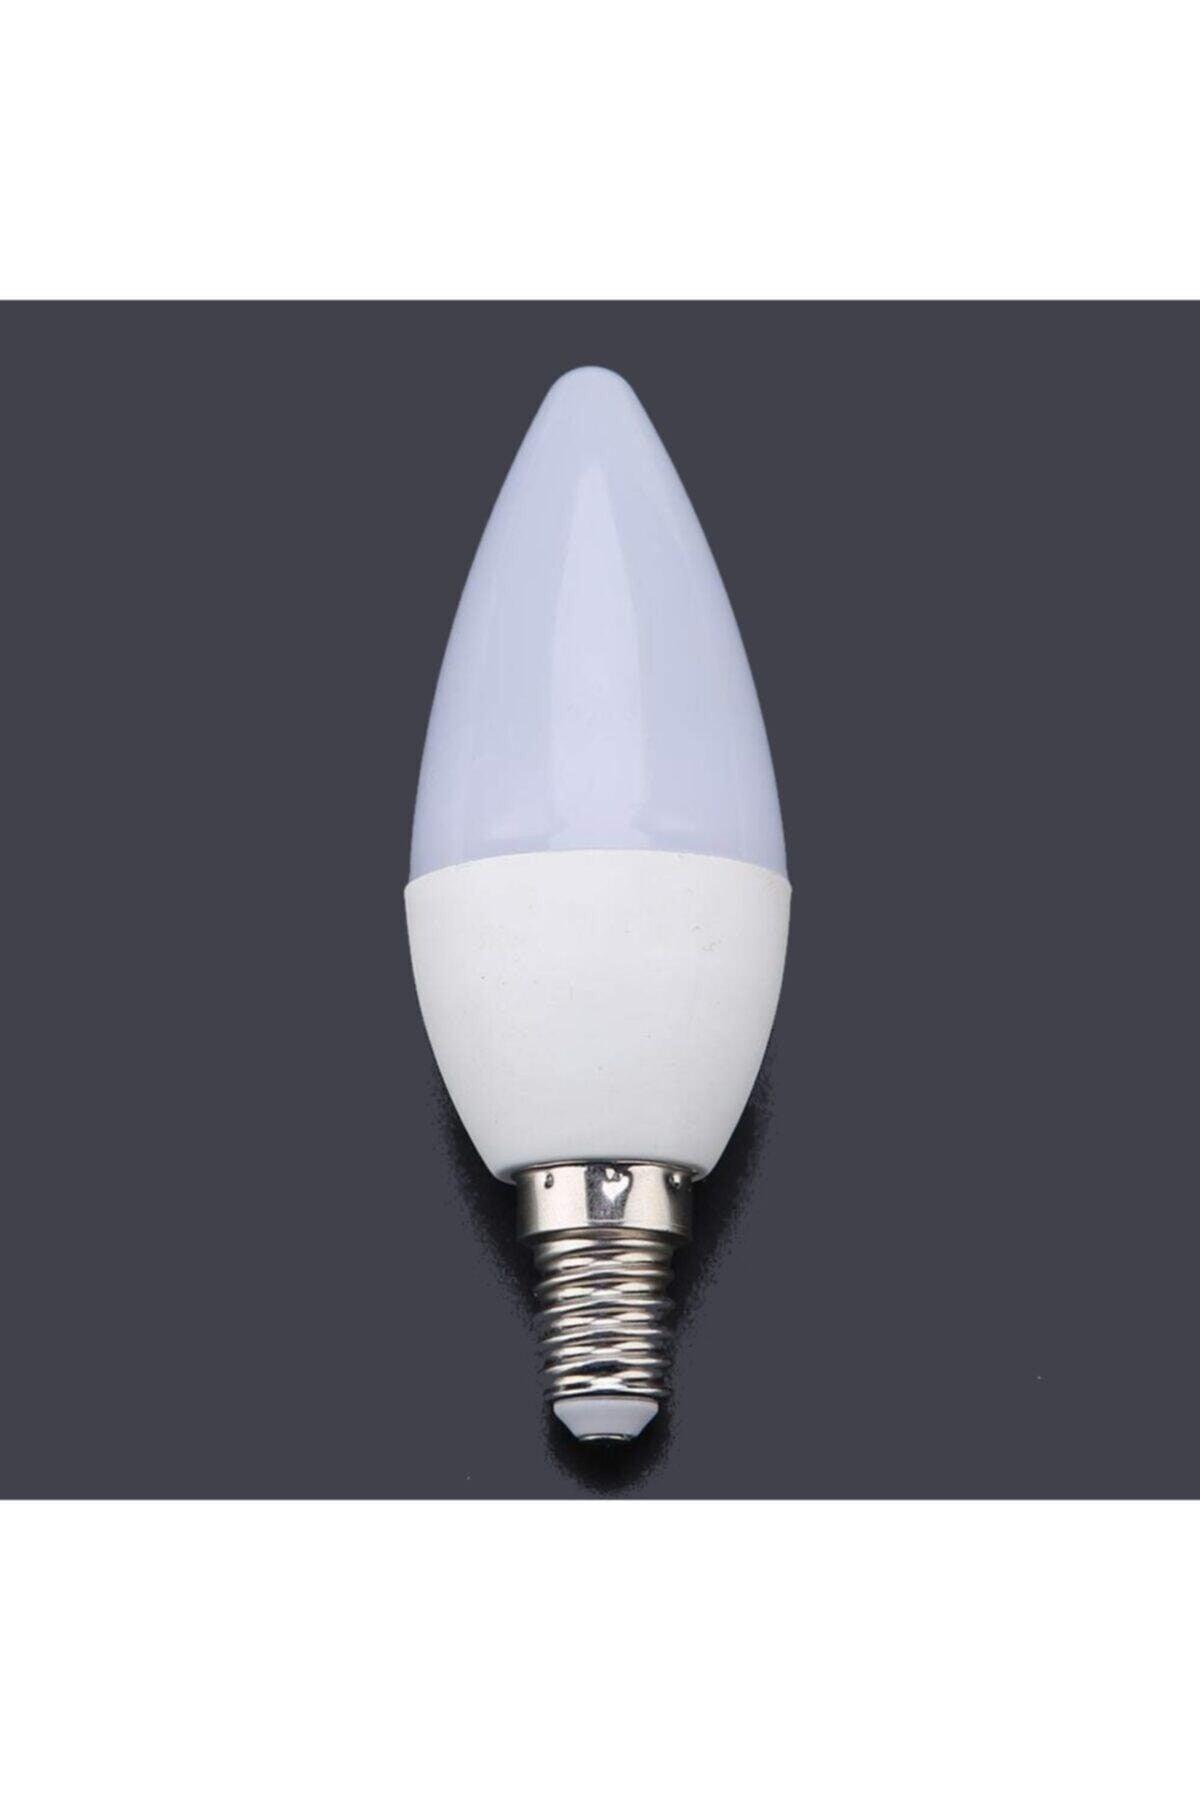 10 Pcs 7 Watt E14 Thin Lampholder White Light Candle